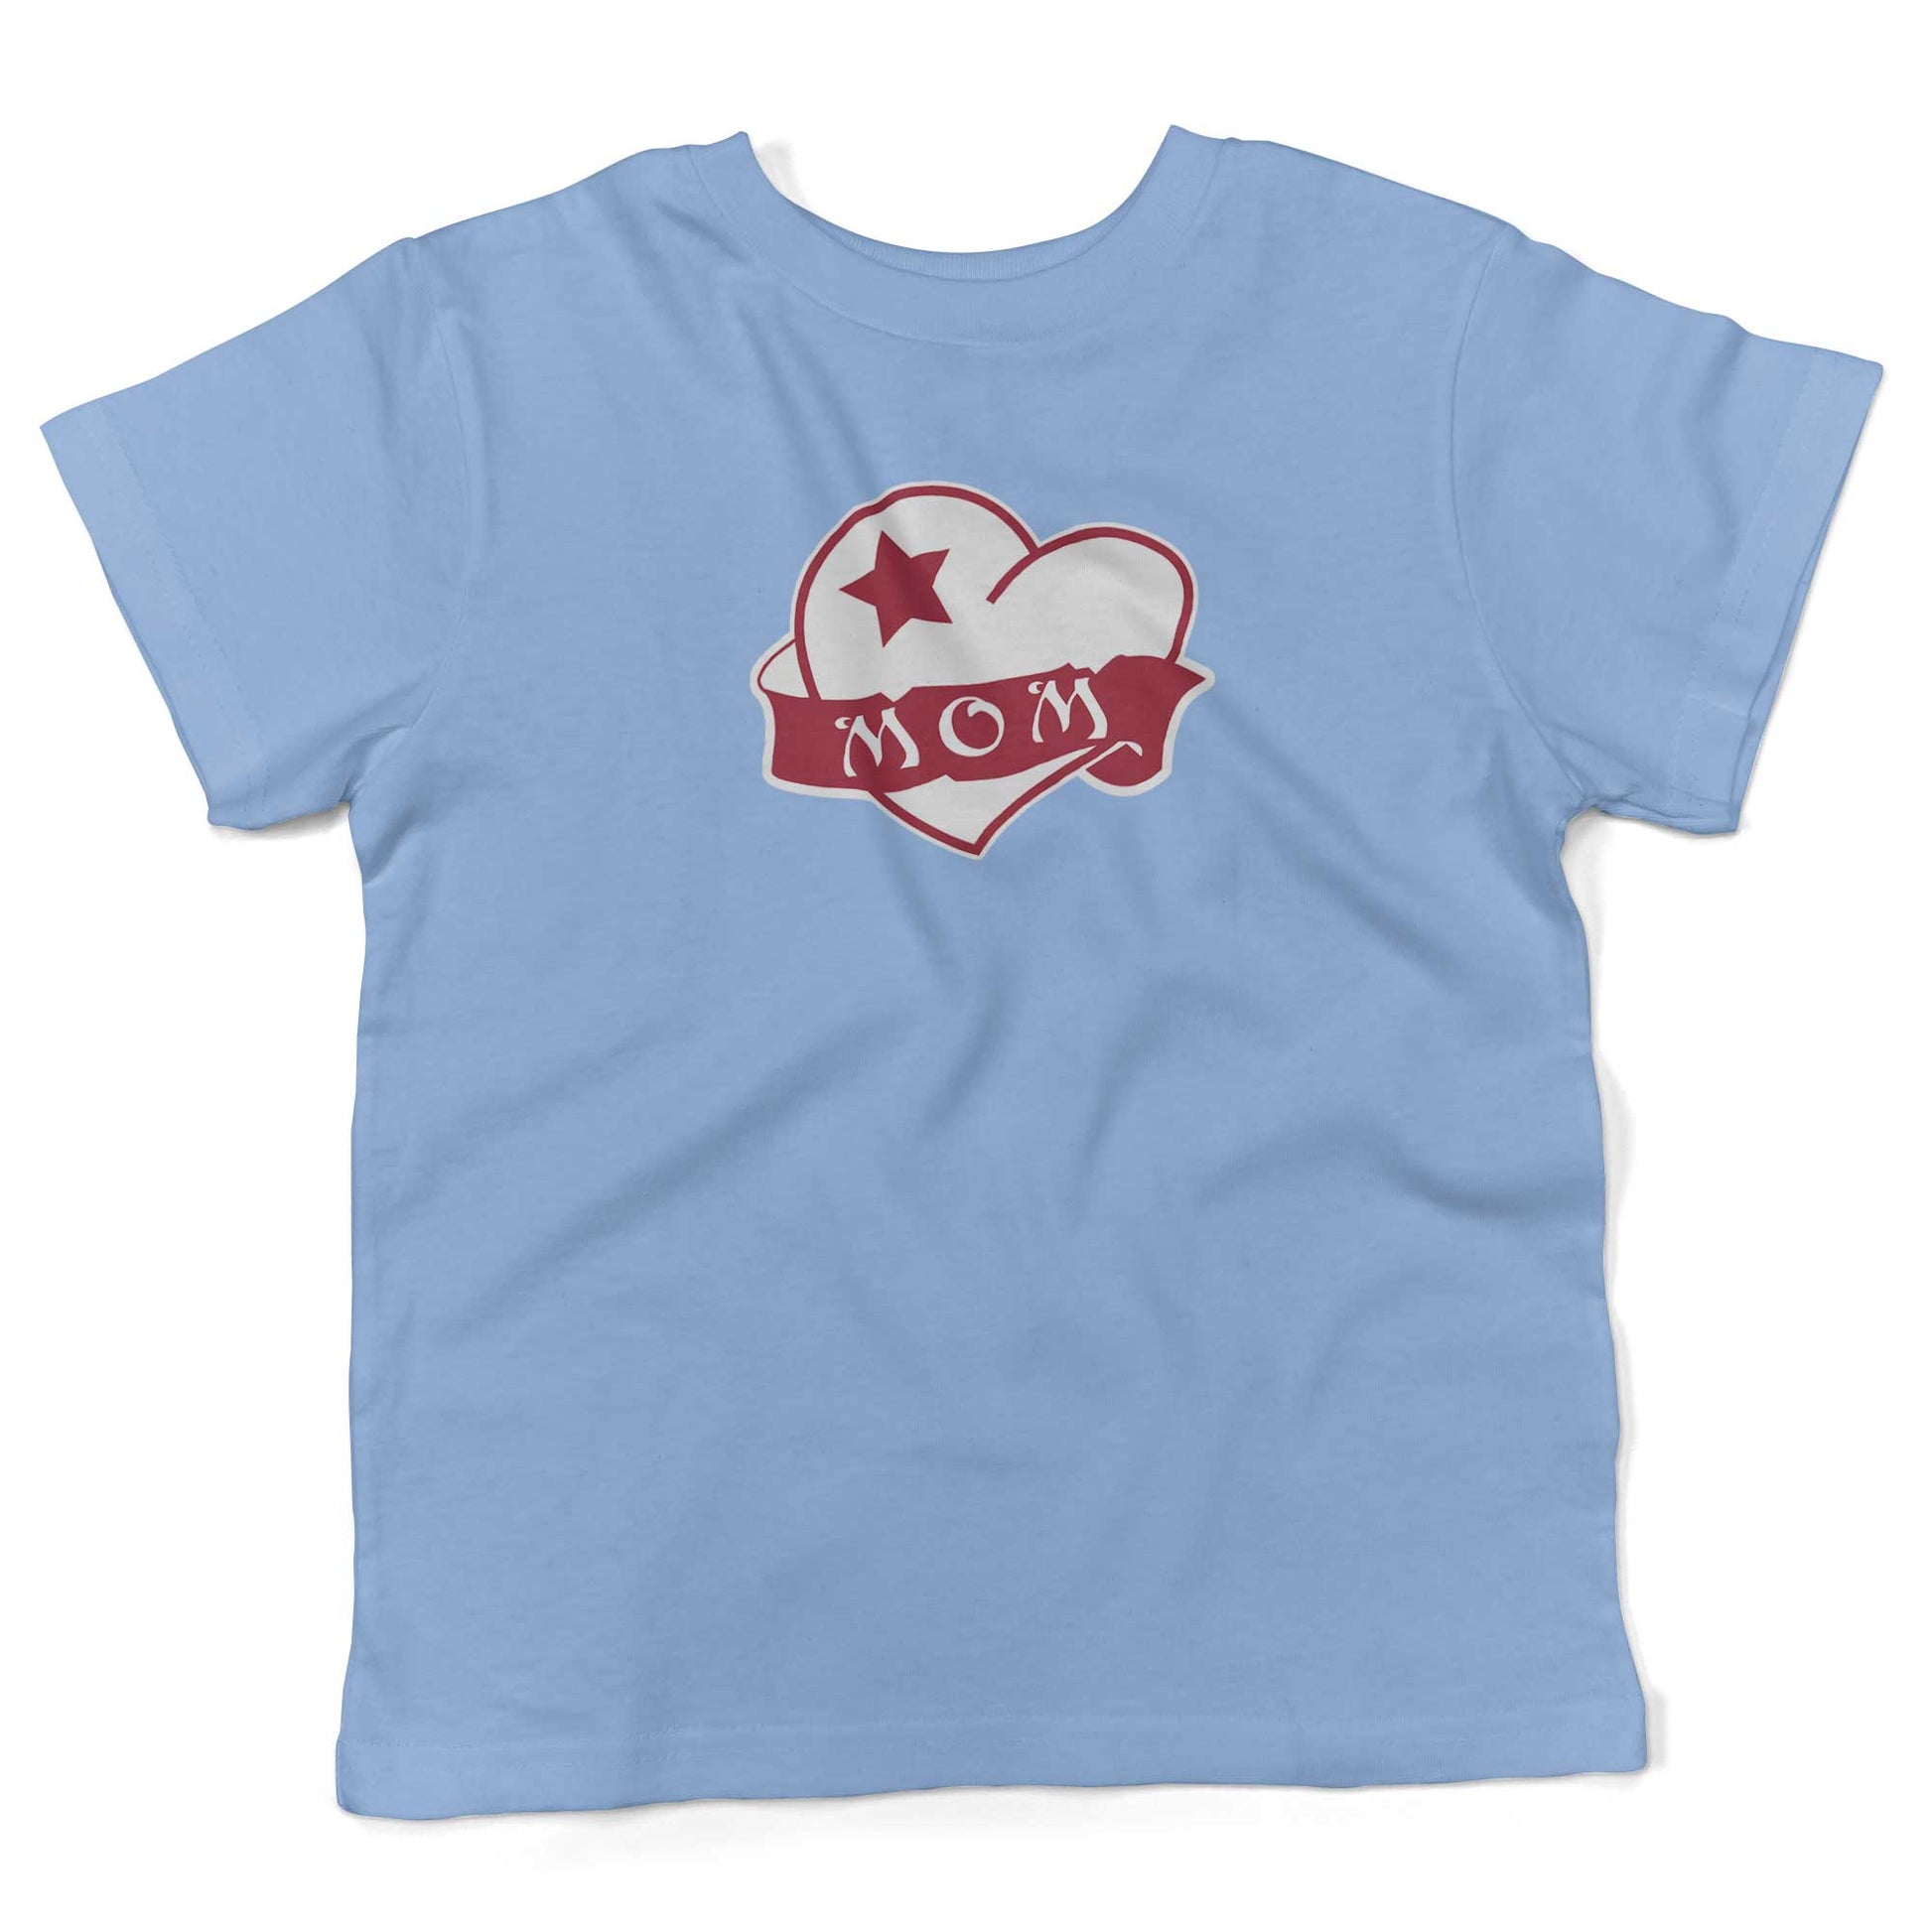 Mom Tattoo Heart Toddler Shirt-Organic Baby Blue-2T